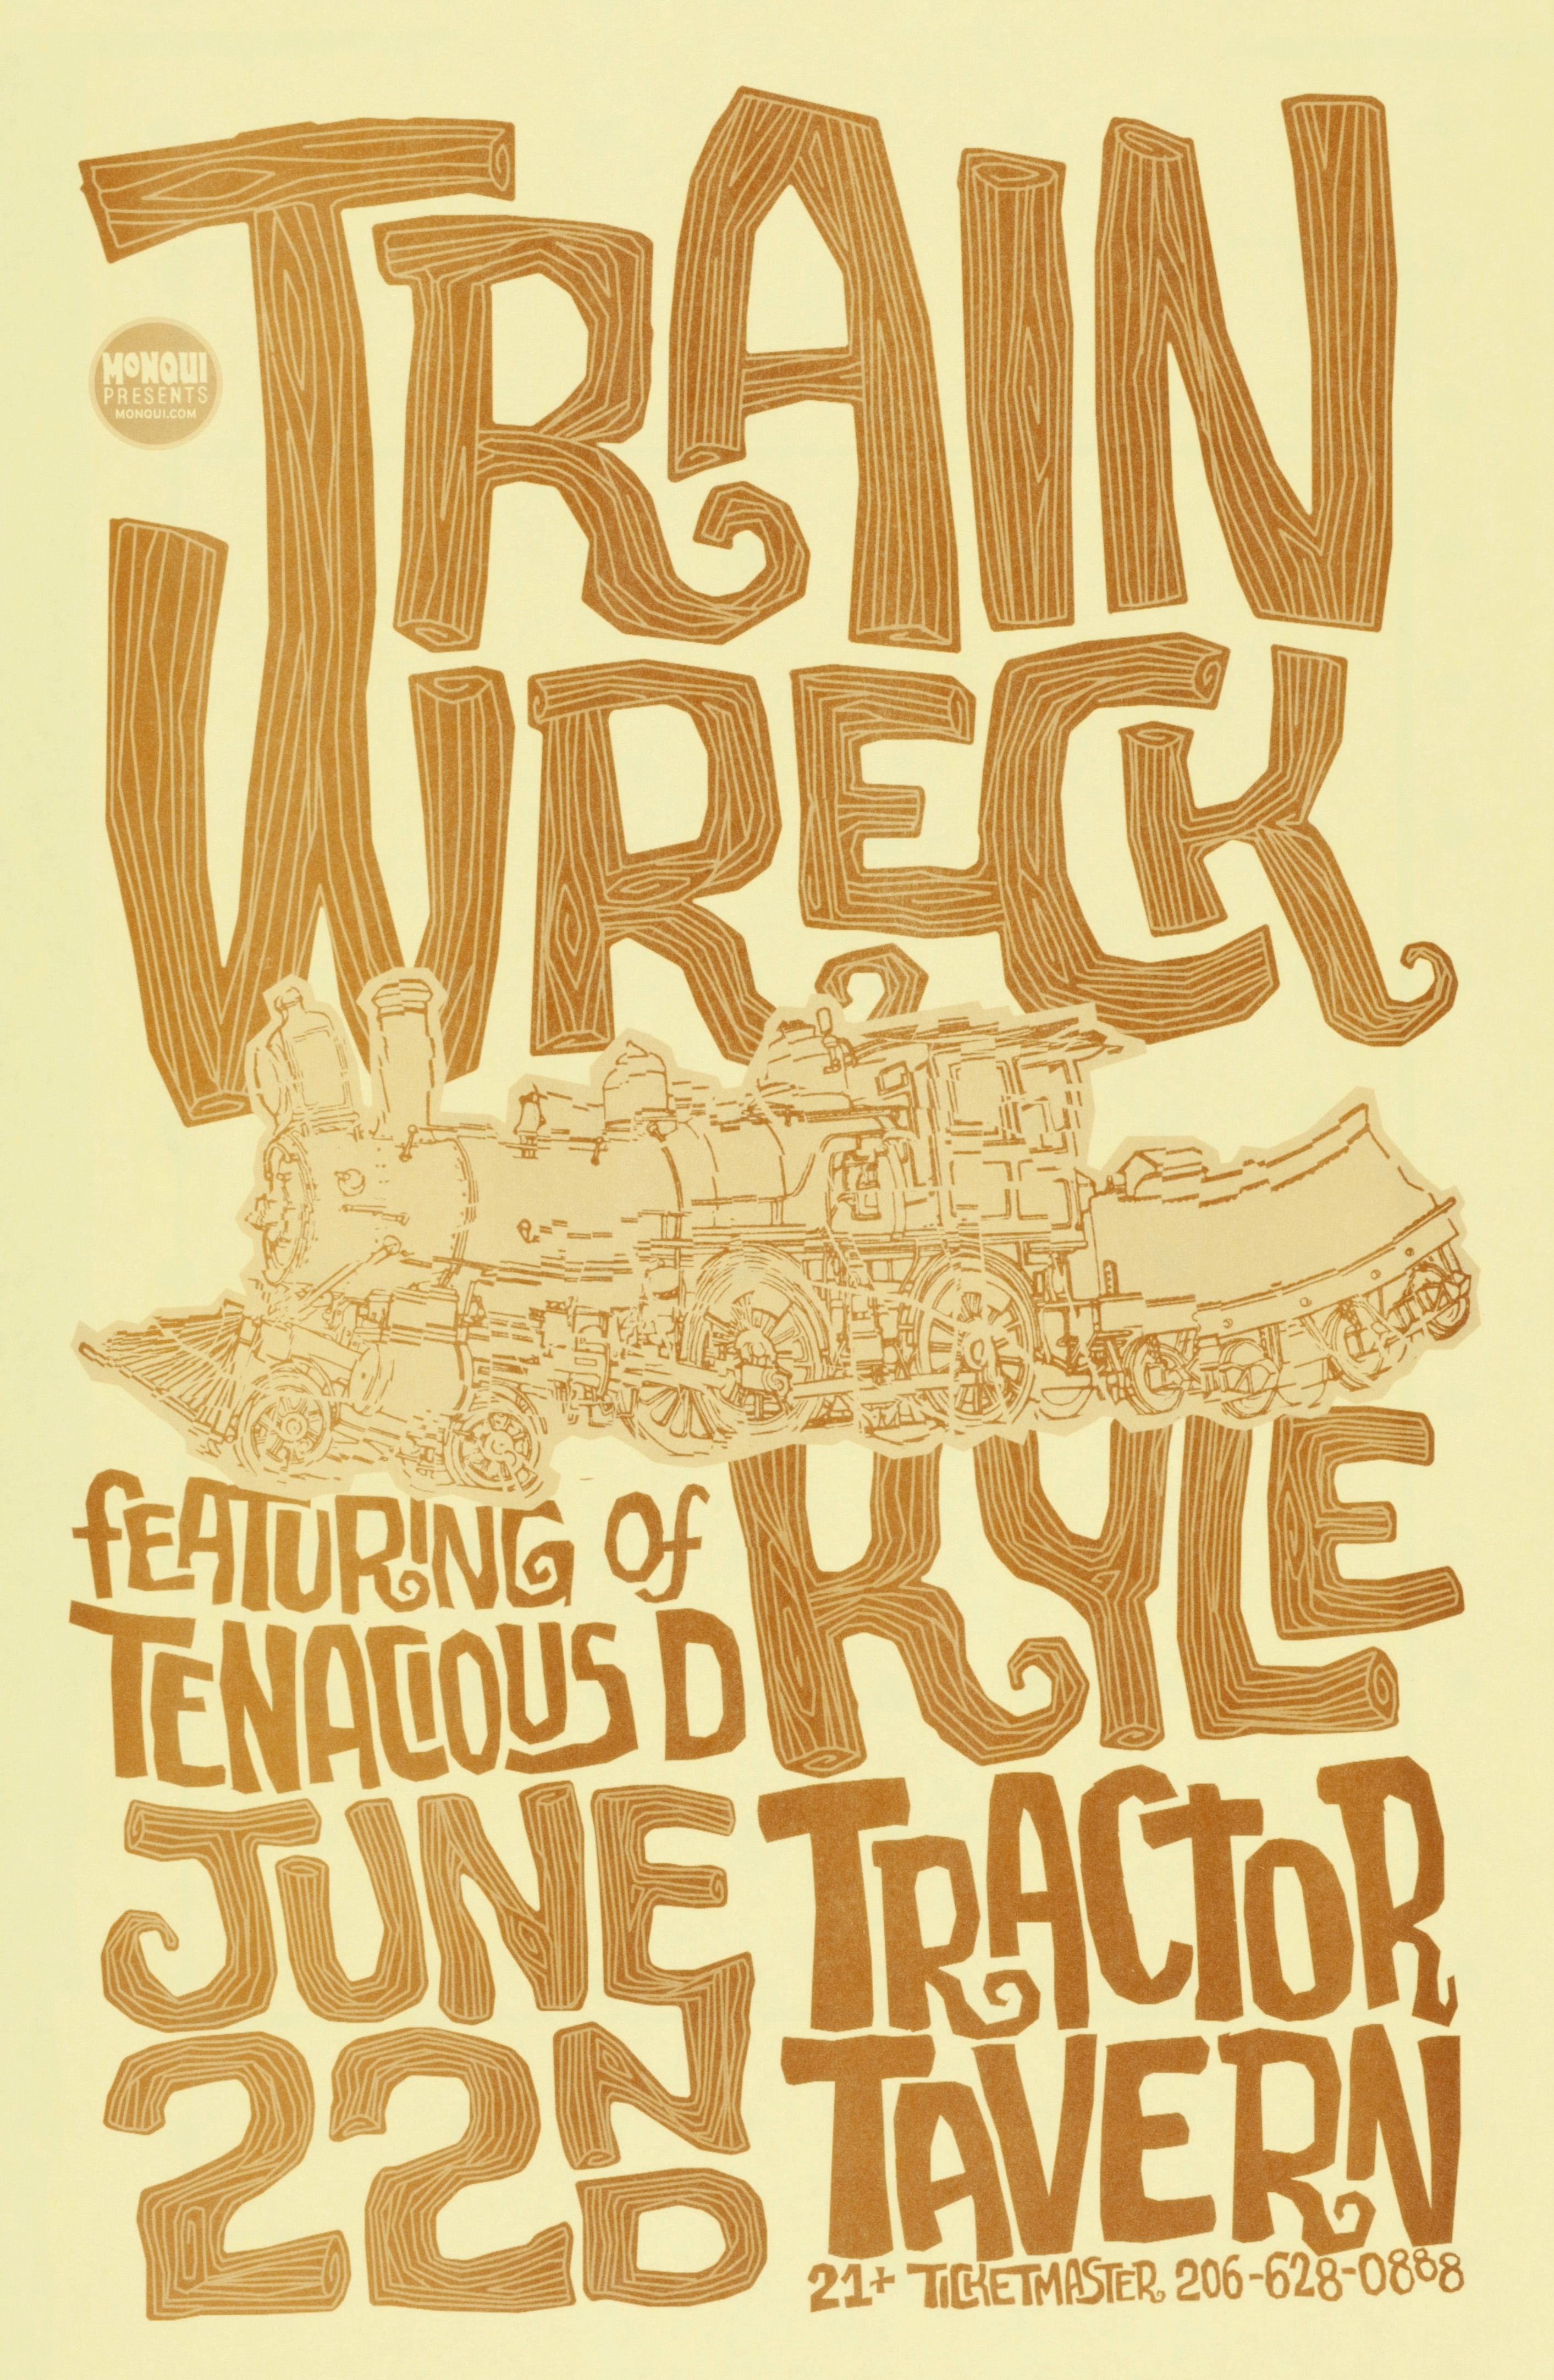 MXP-83.1 Train Wreck 2003 Tractor Tavern  Jun 22 Concert Poster